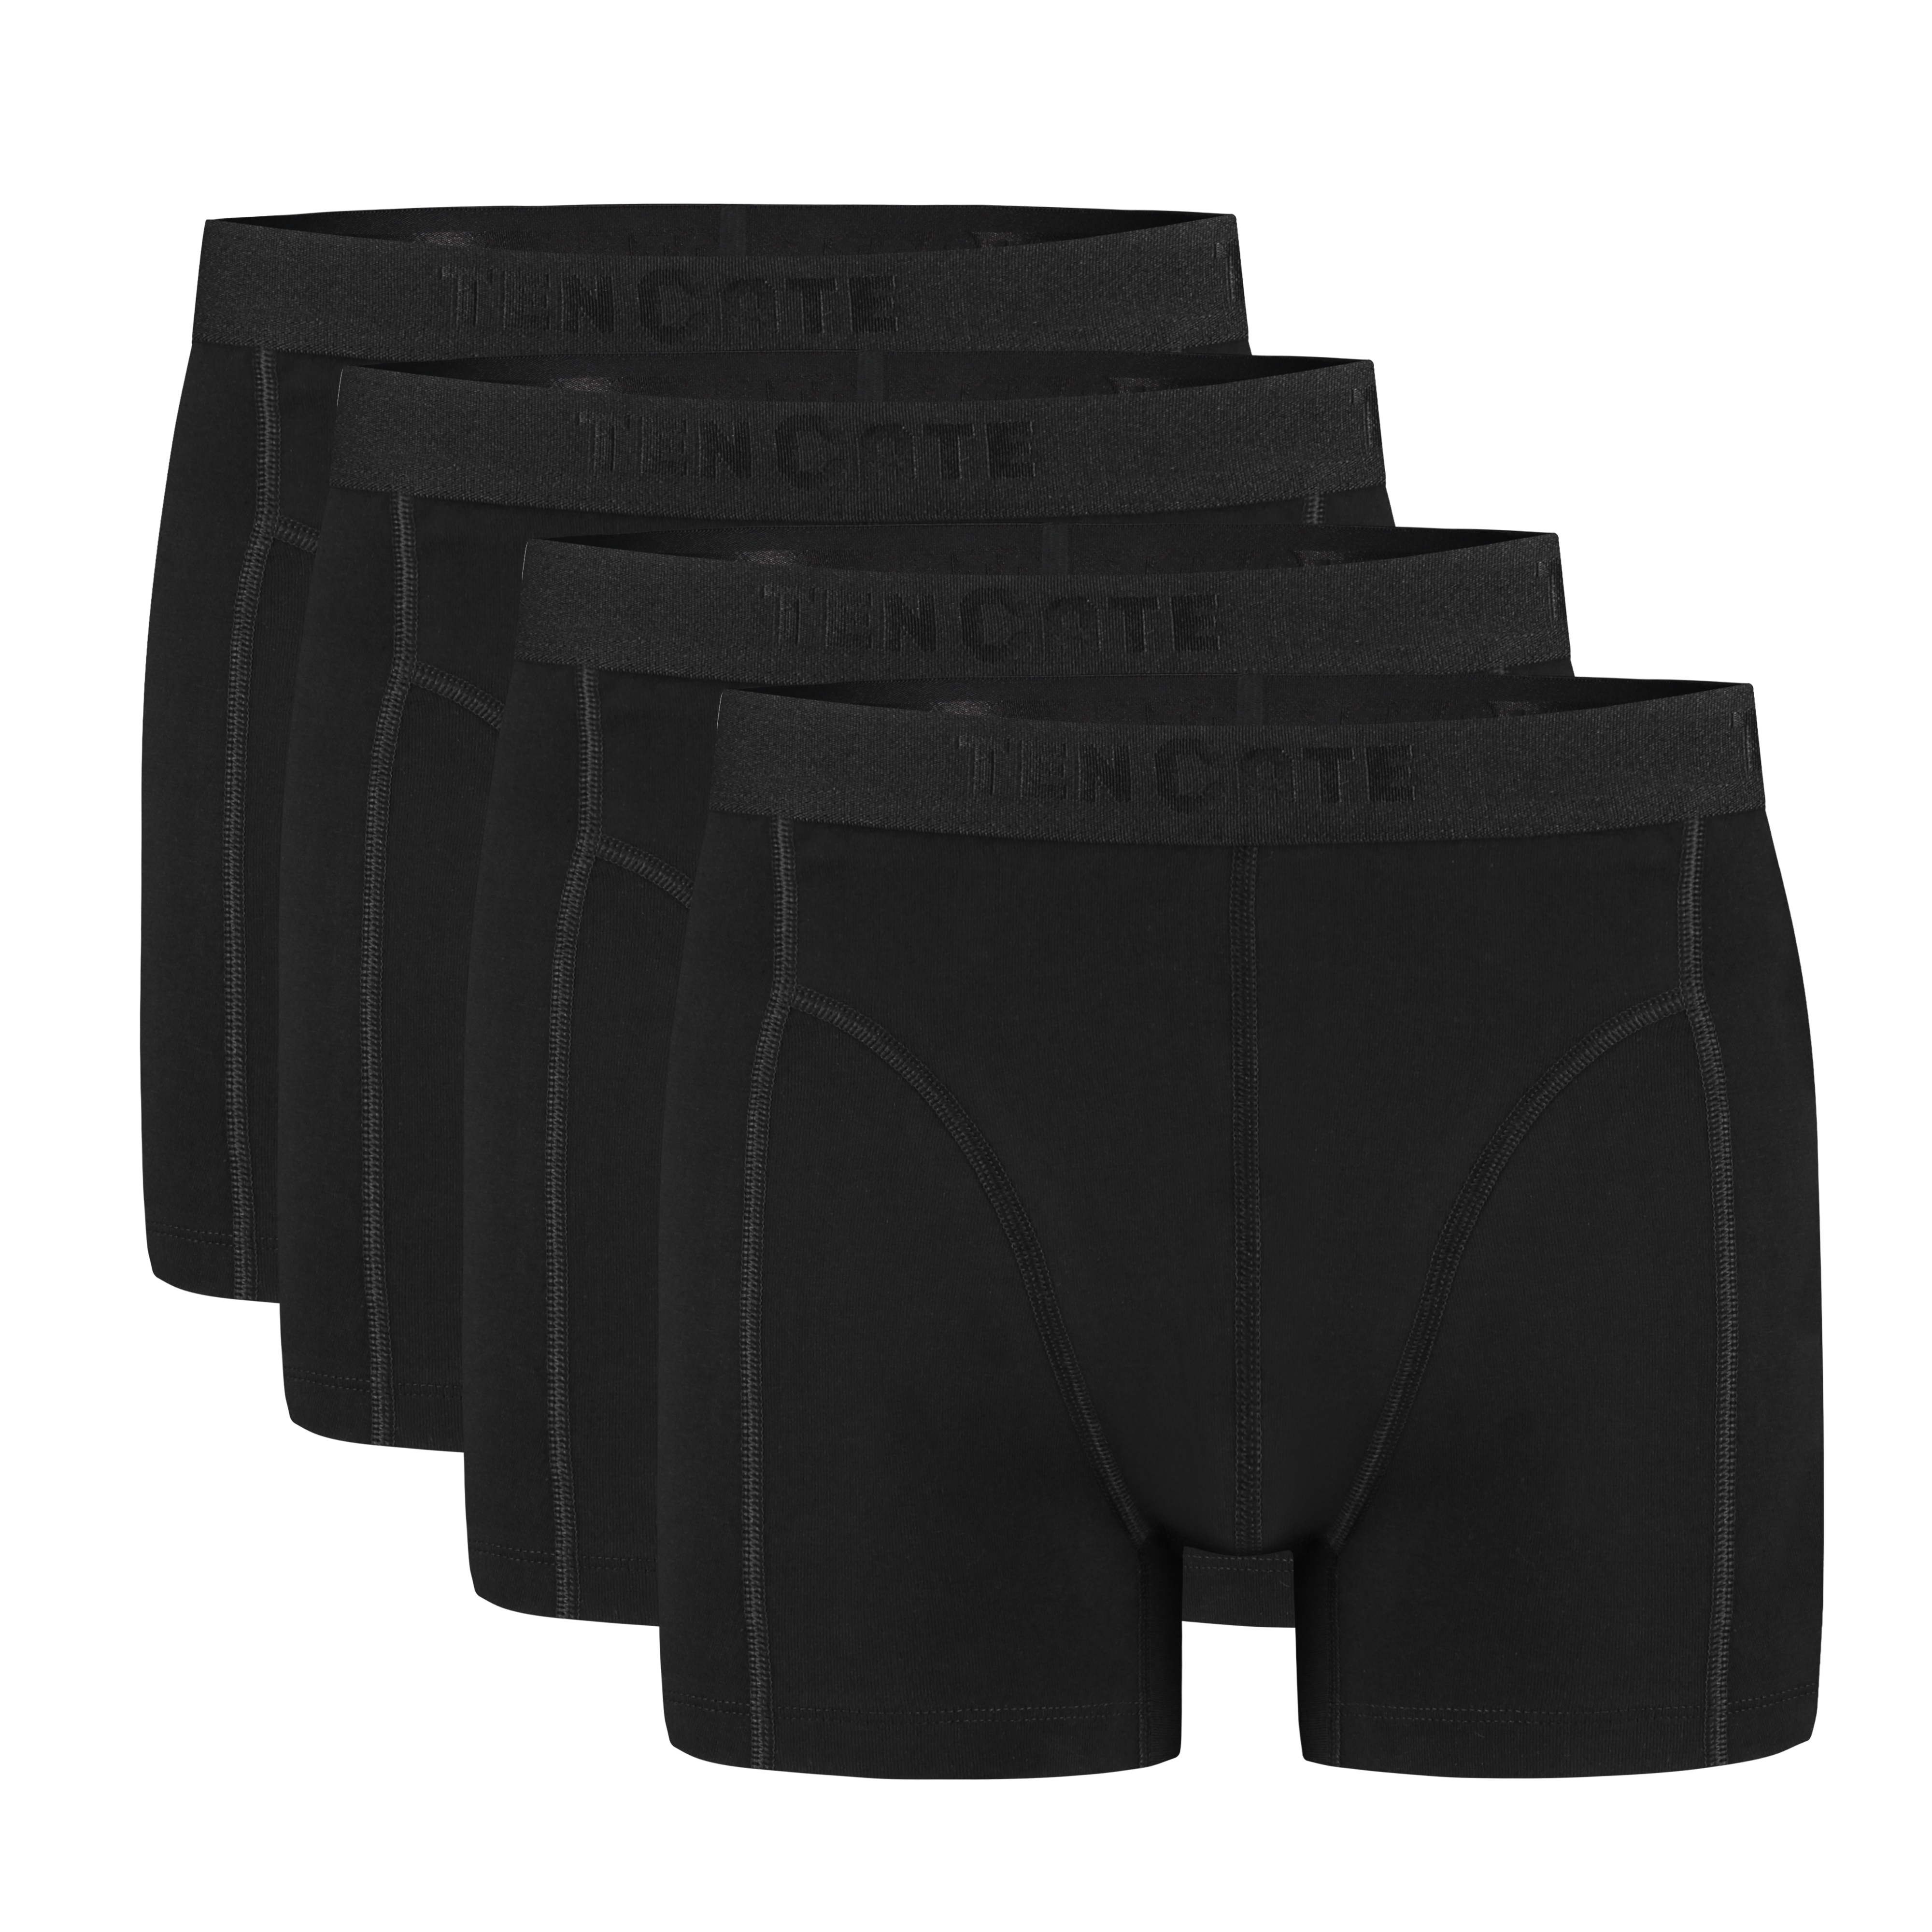 shorts navy 4 pack